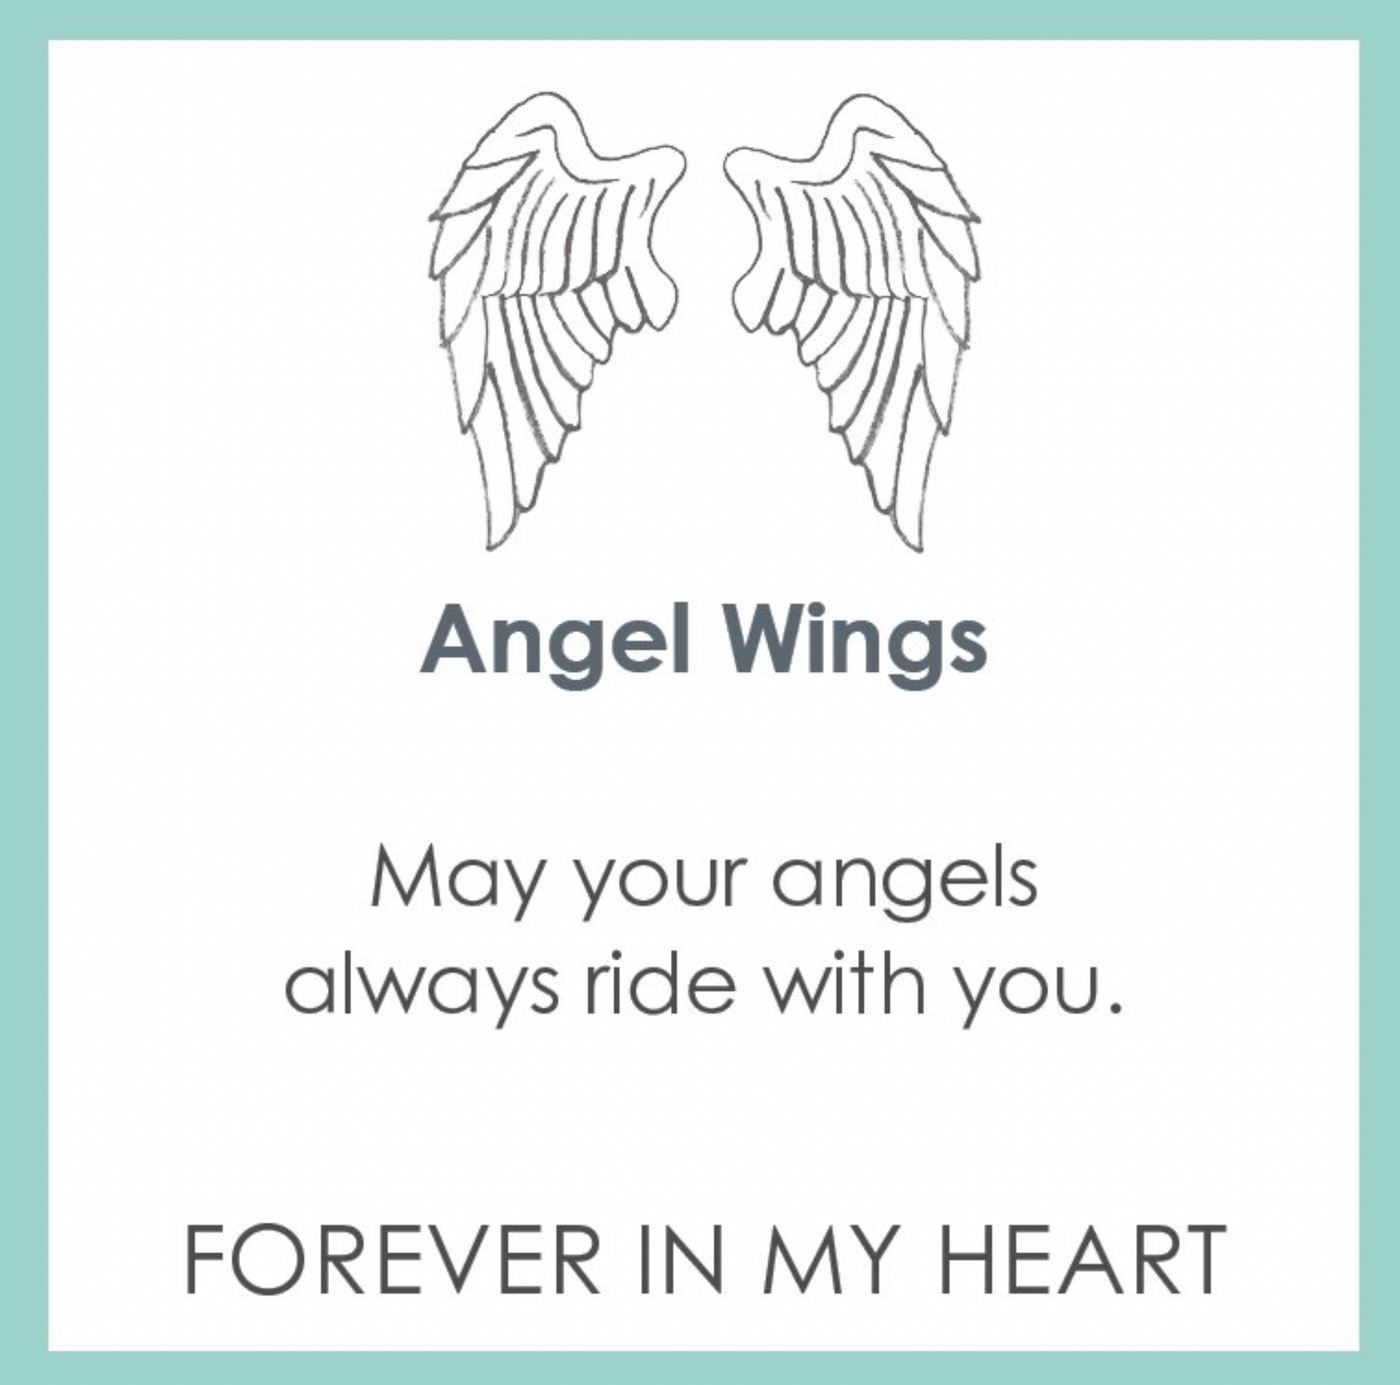 Angel Wings Heart Medium Pendant, Gold Ivory